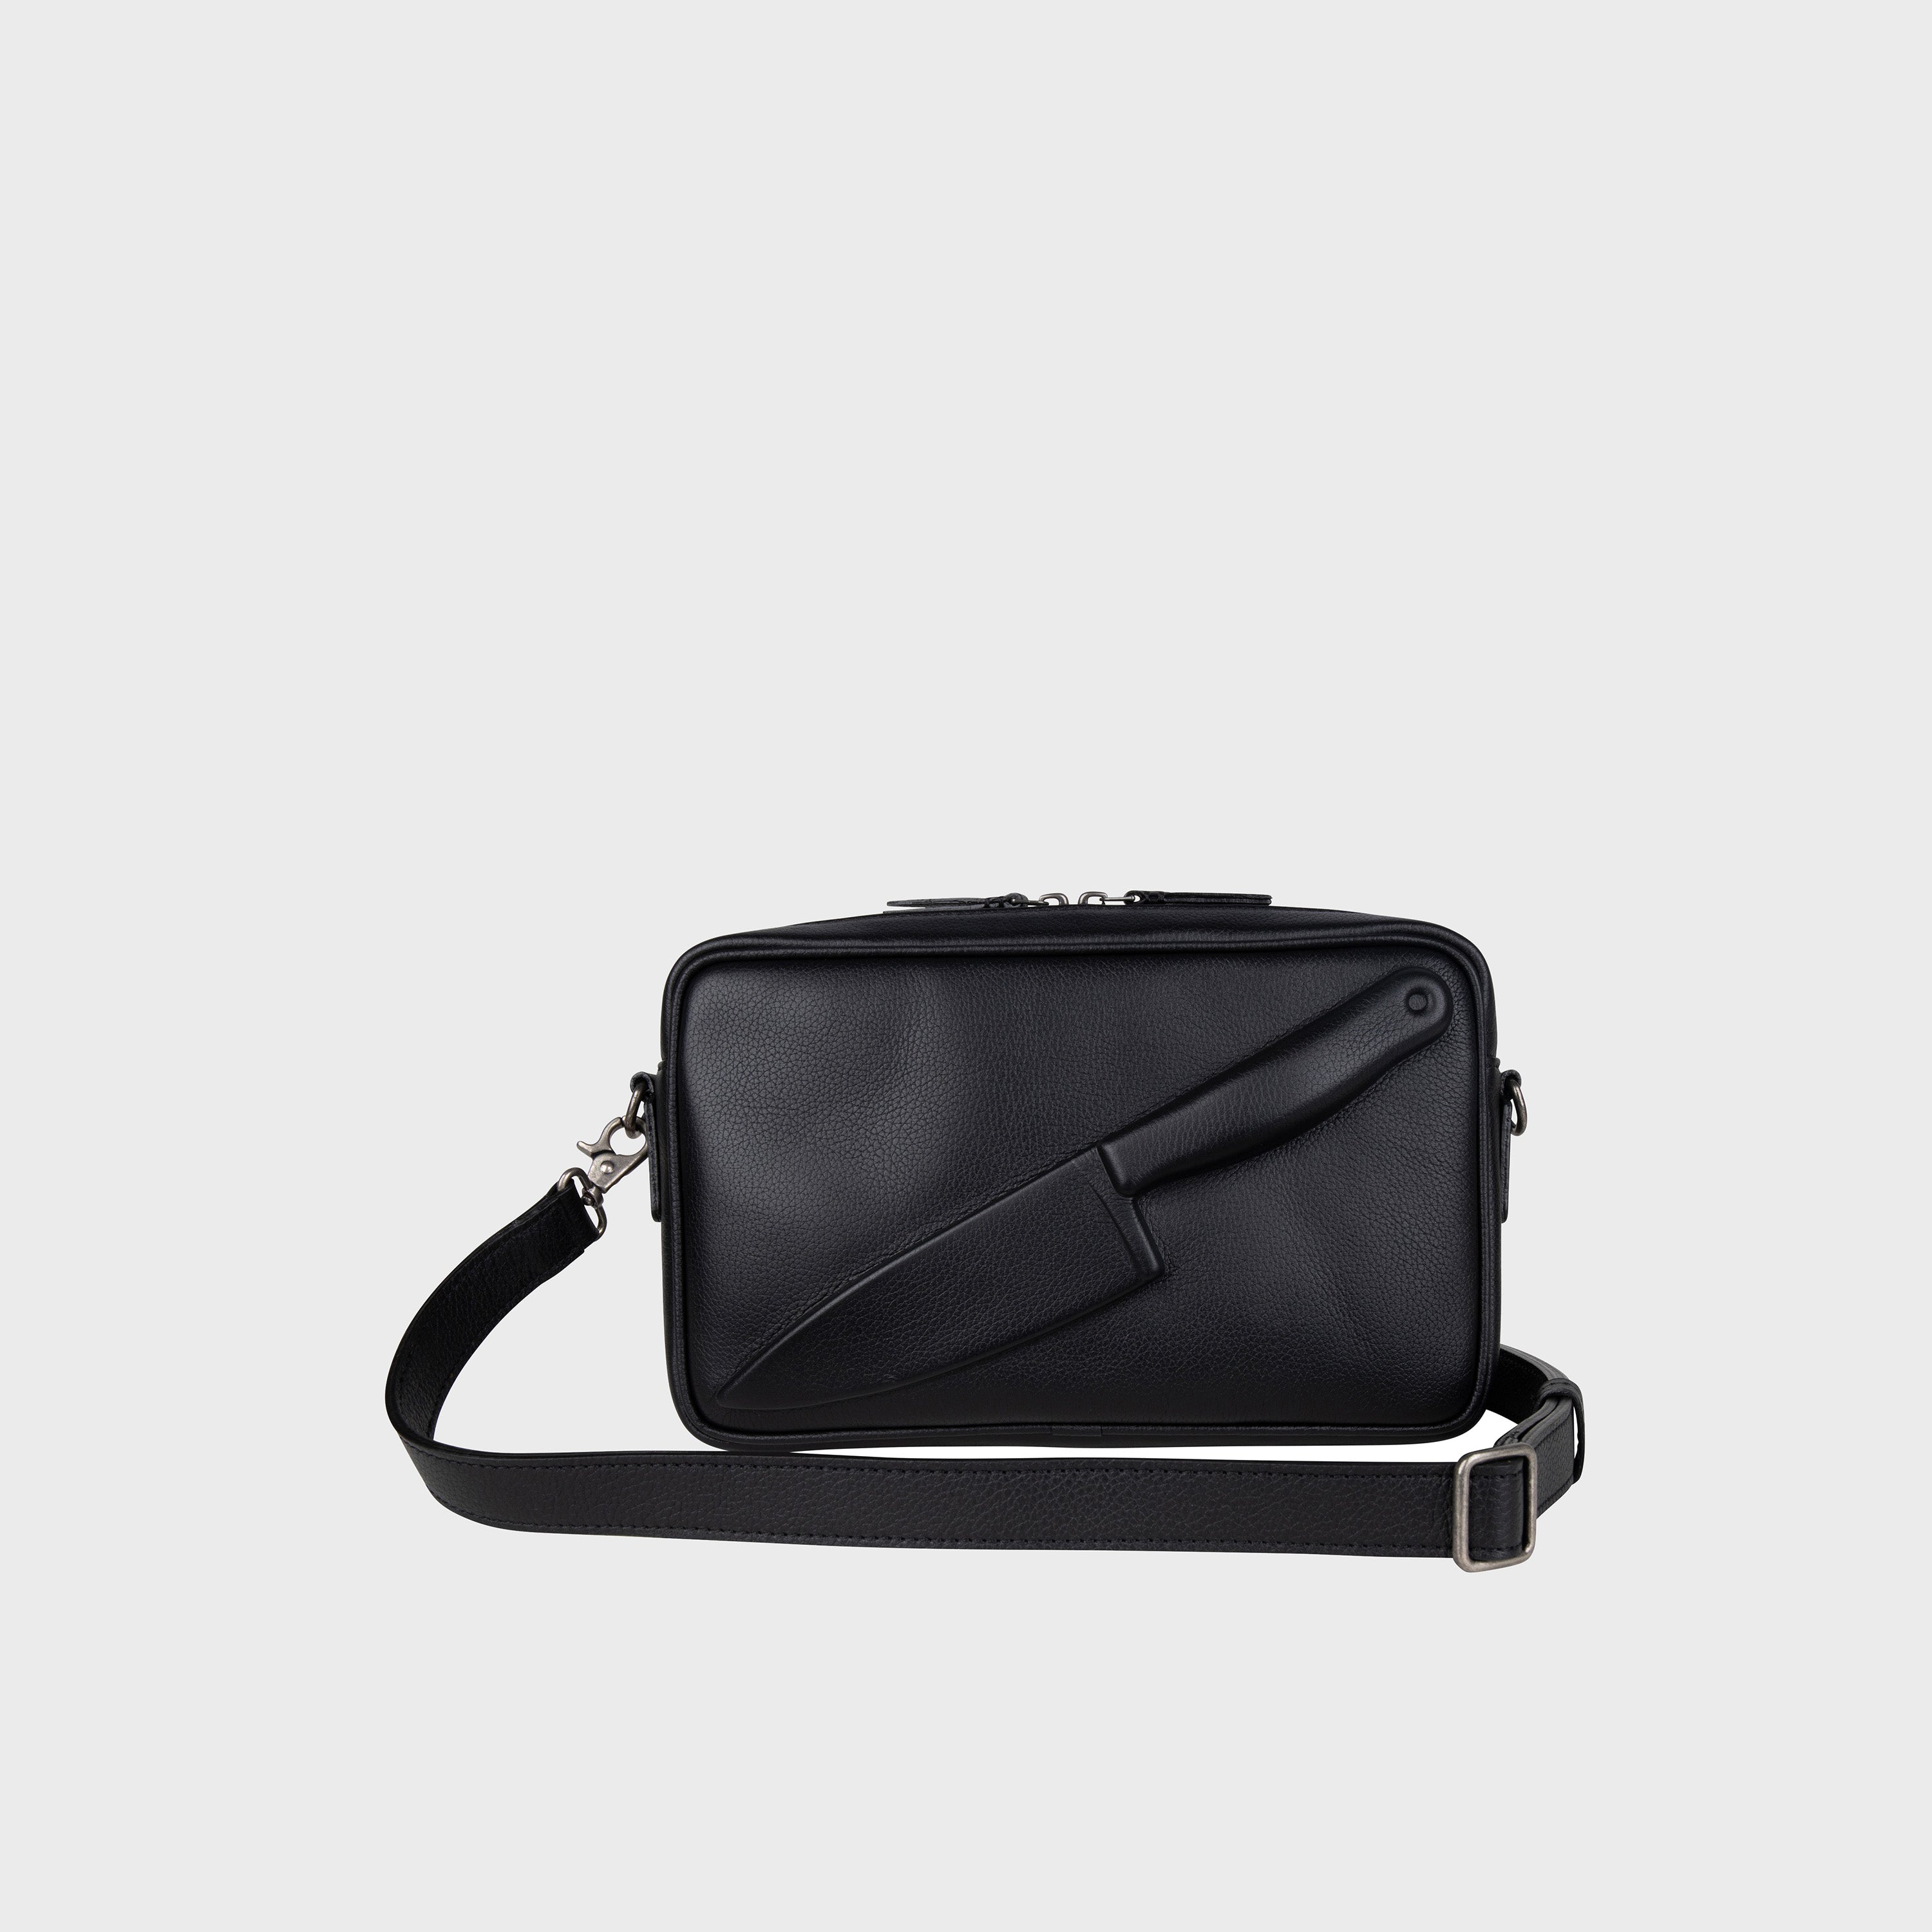 Vlieger & Vandam - Messenger Bag Black, embossed leather gun bag